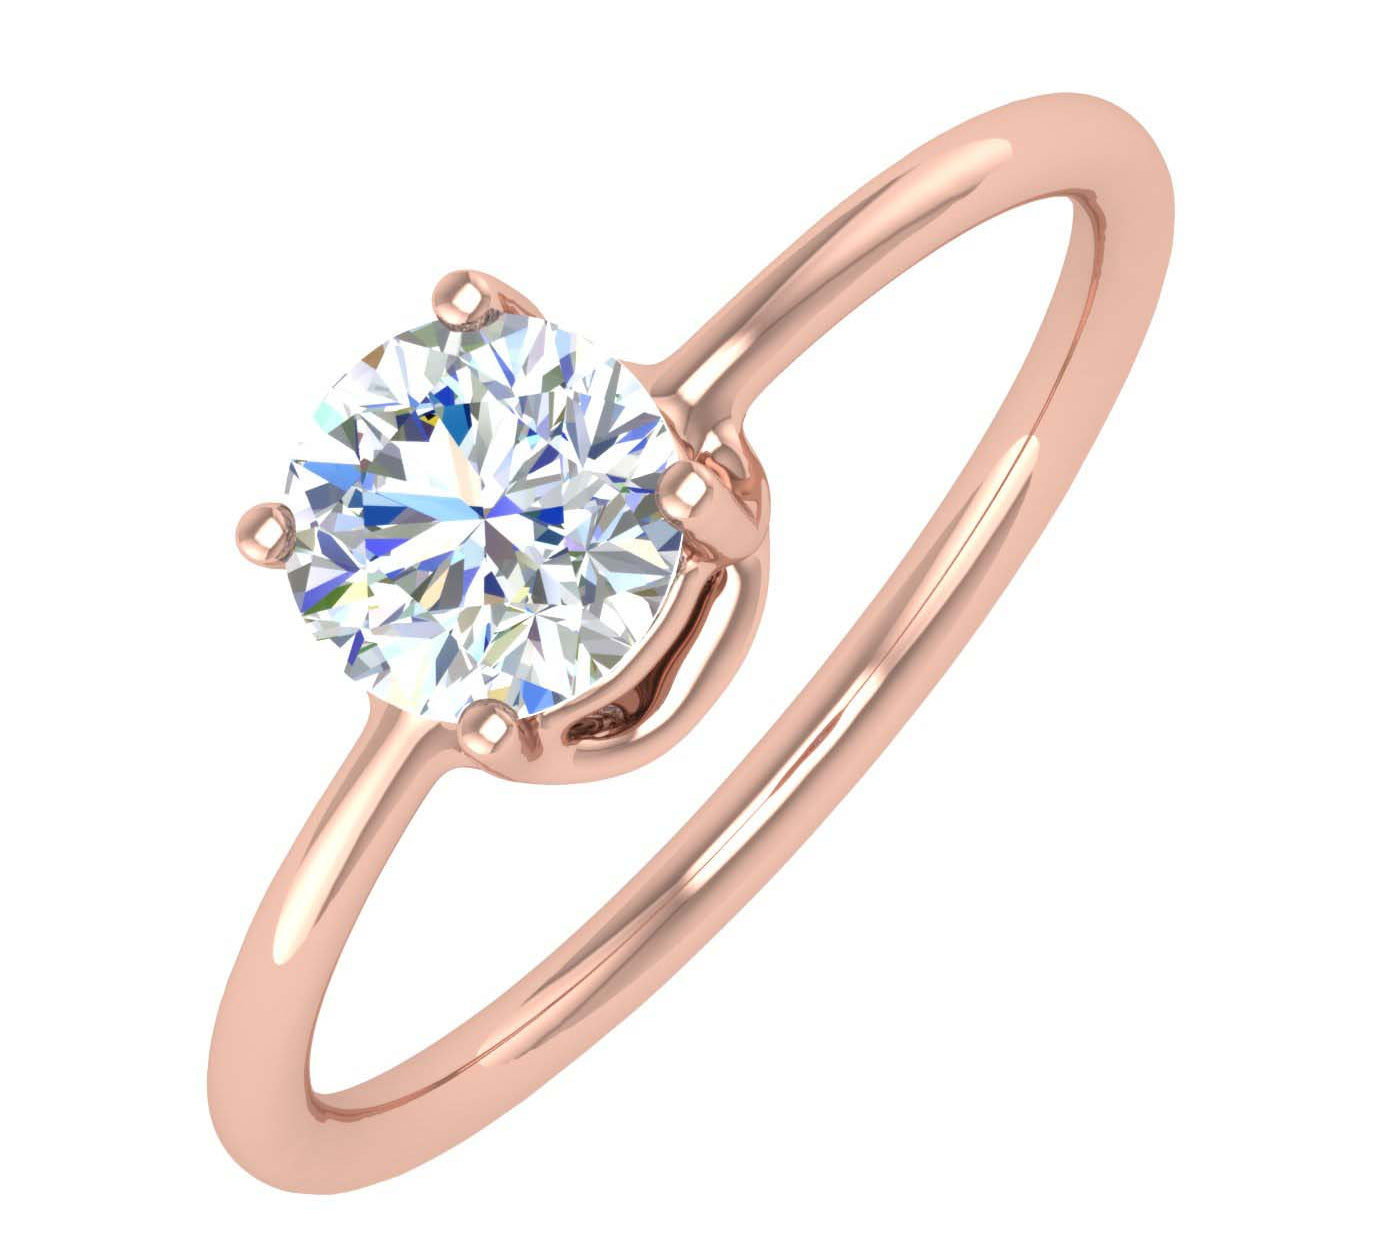 1/2 Carat Diamond Solitaire Engagement Ring in Gold - IGI Certified